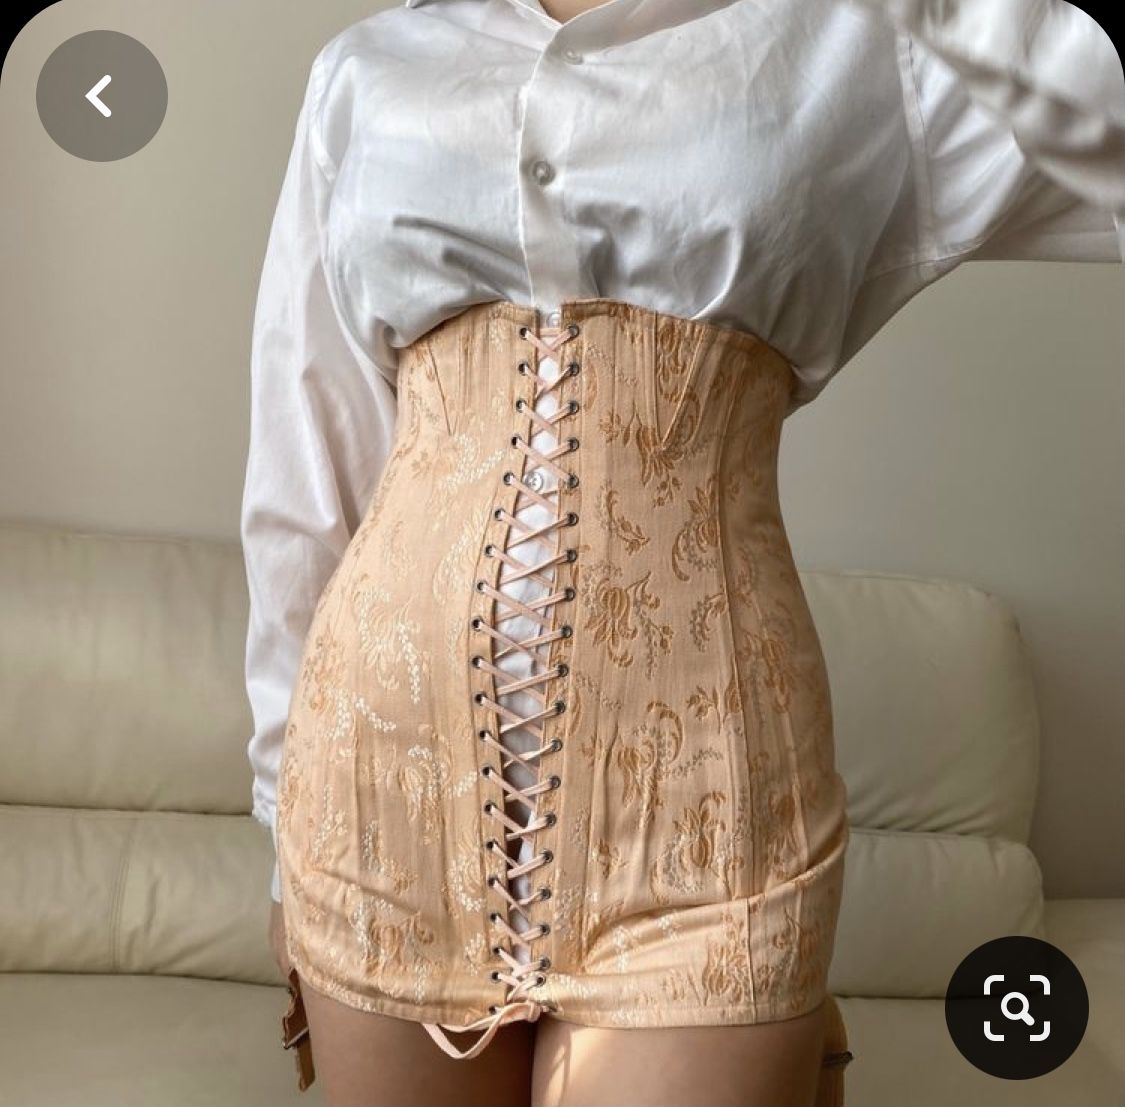 bryan garci reccomend vintage corsets and girdles pic